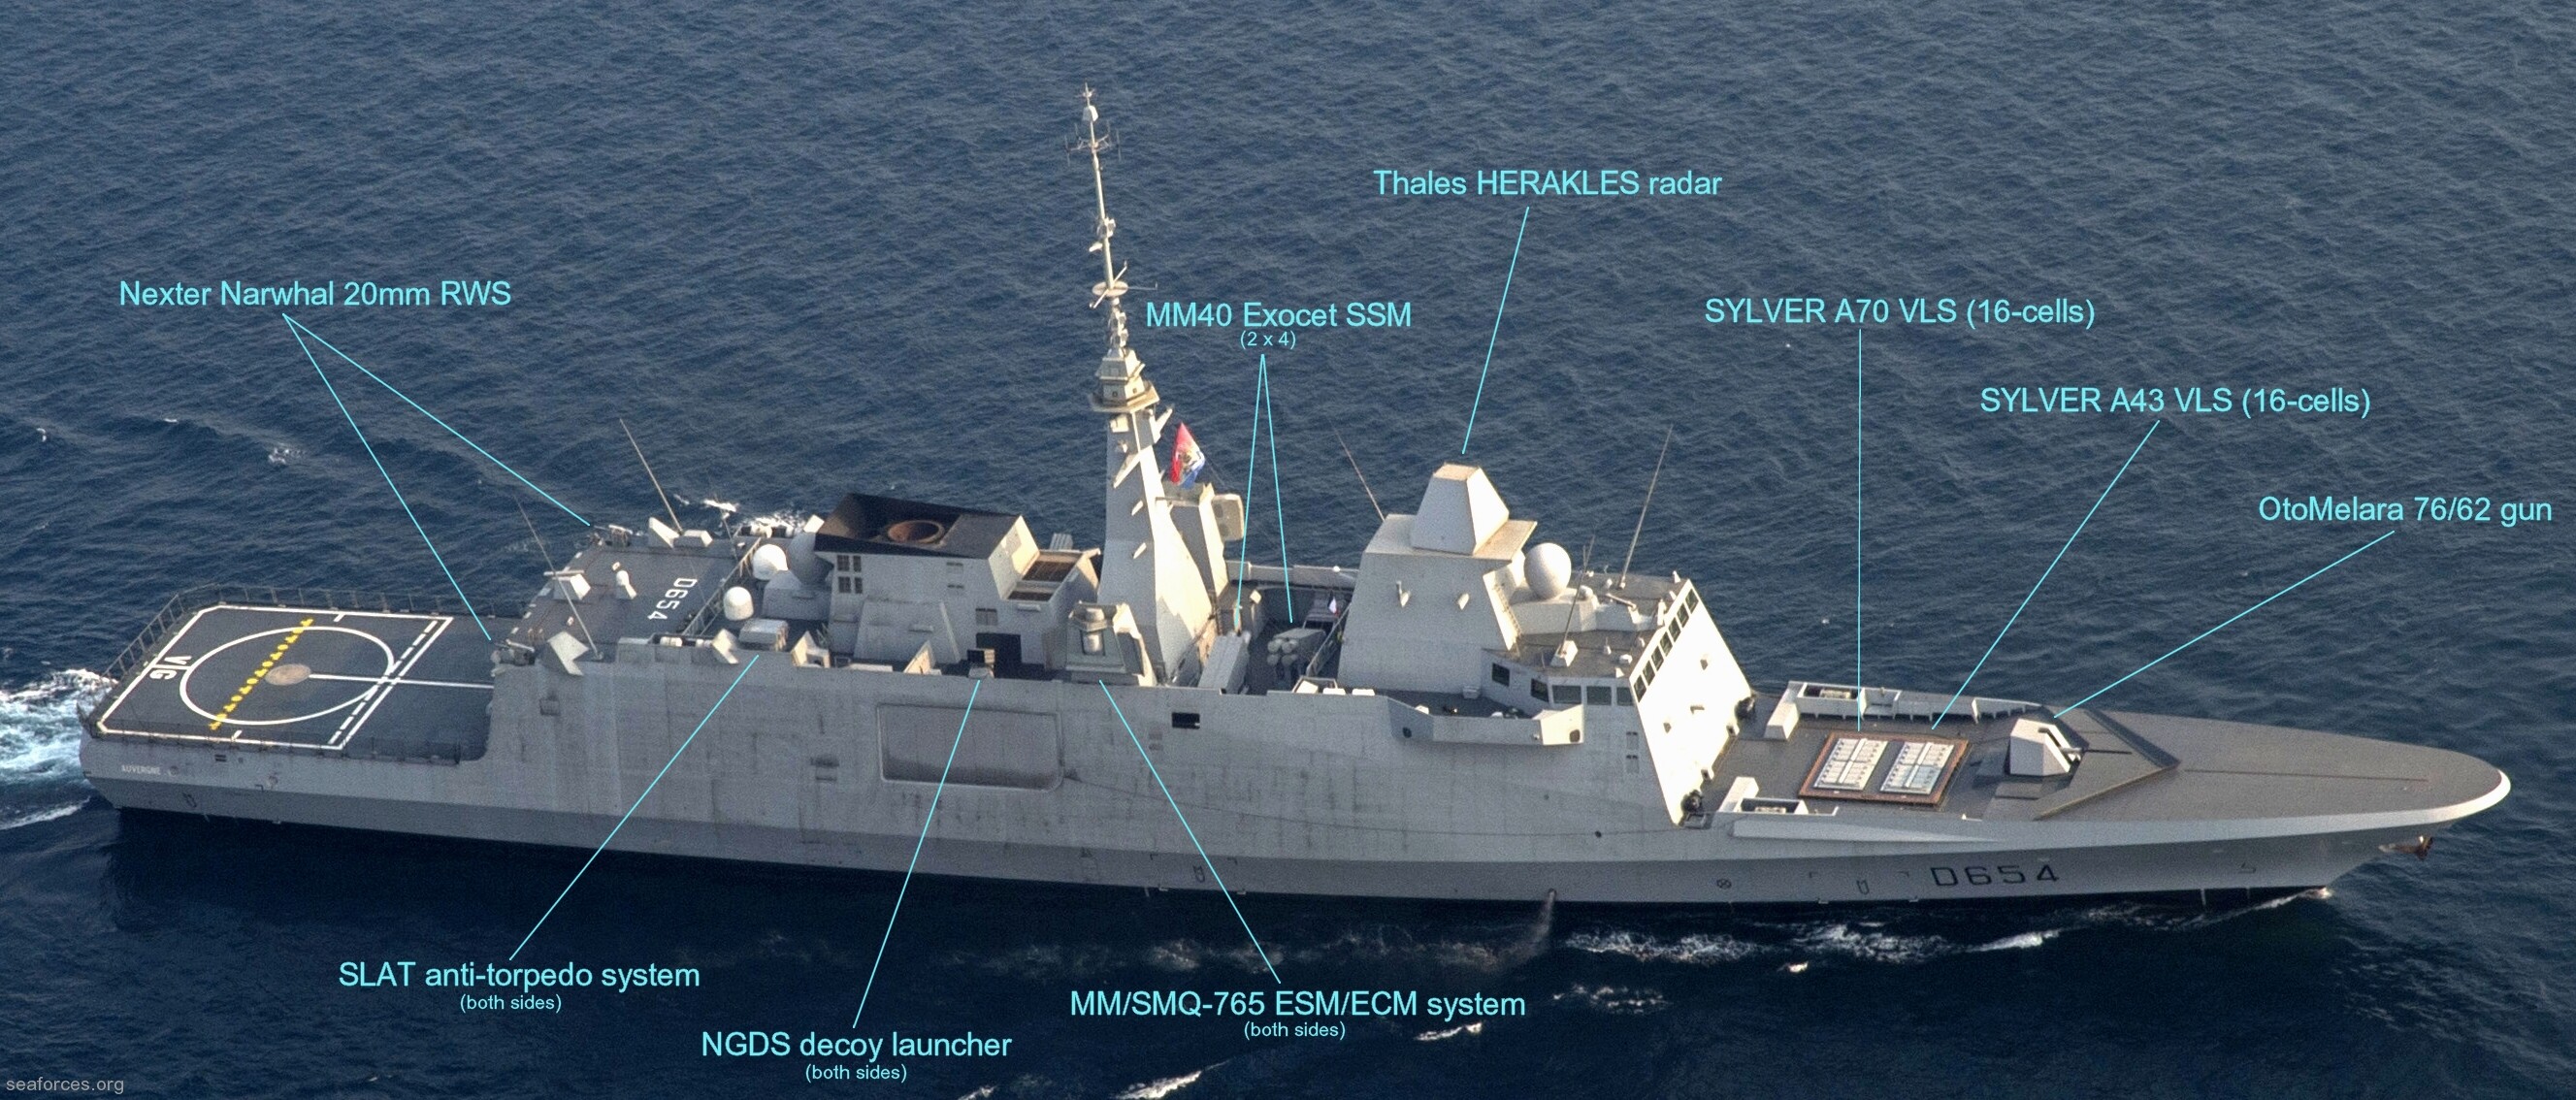 aquitaine fremm class fregate frigate french navy marine nationale 02b armament oto melara 76/62 gun sylver a43 a70 vls aster-15 sam missile mdcn exocet ssm